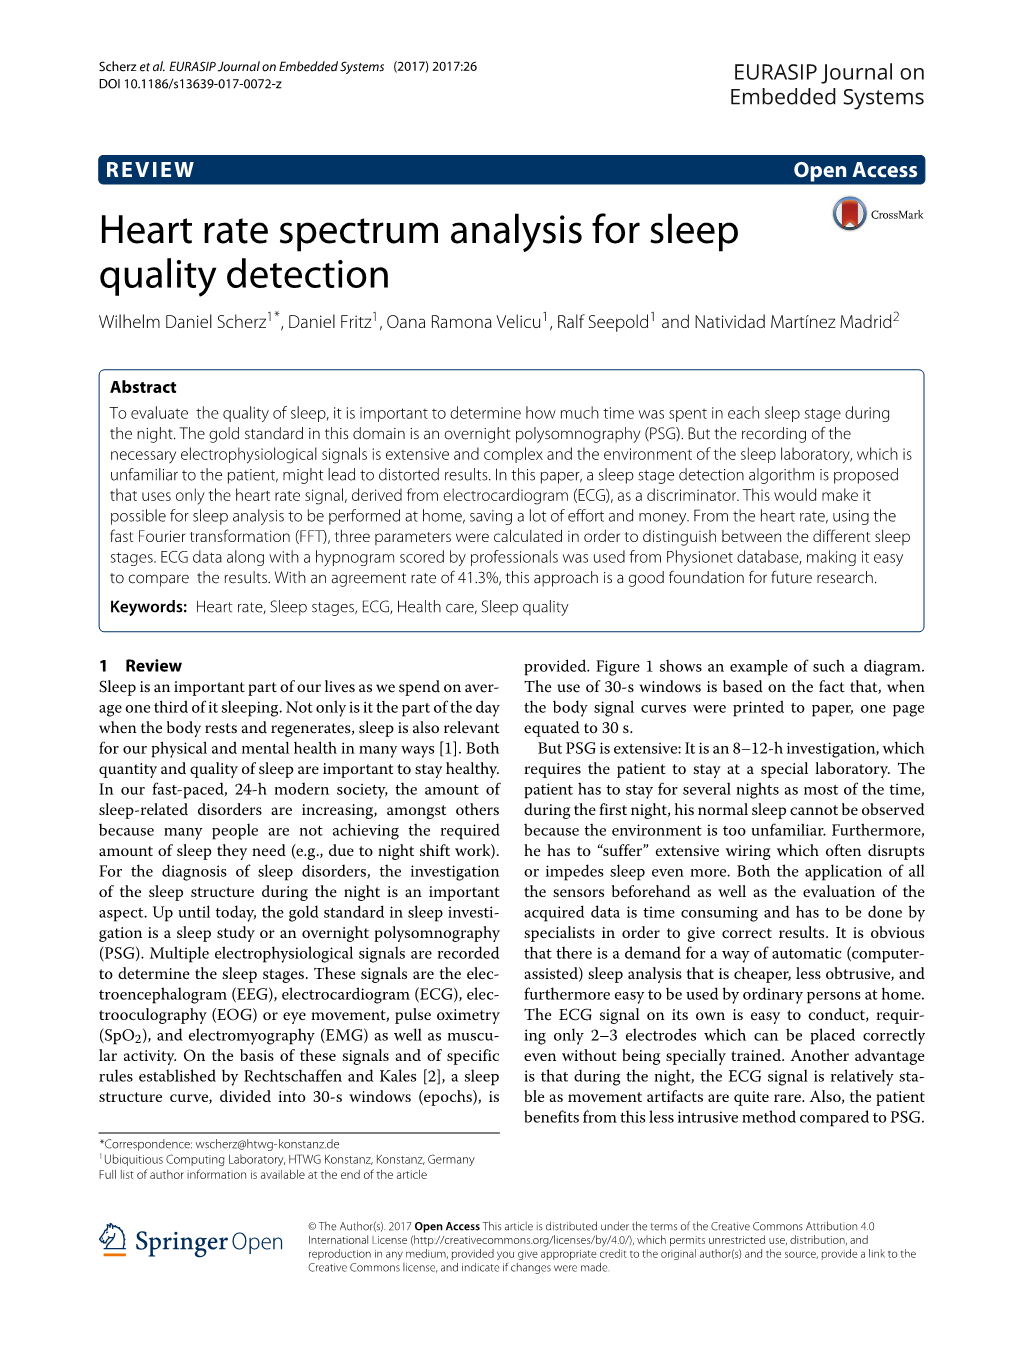 Heart Rate Spectrum Analysis for Sleep Quality Detection Wilhelm Daniel Scherz1*,Danielfritz1, Oana Ramona Velicu1, Ralf Seepold1 and Natividad Martínez Madrid2